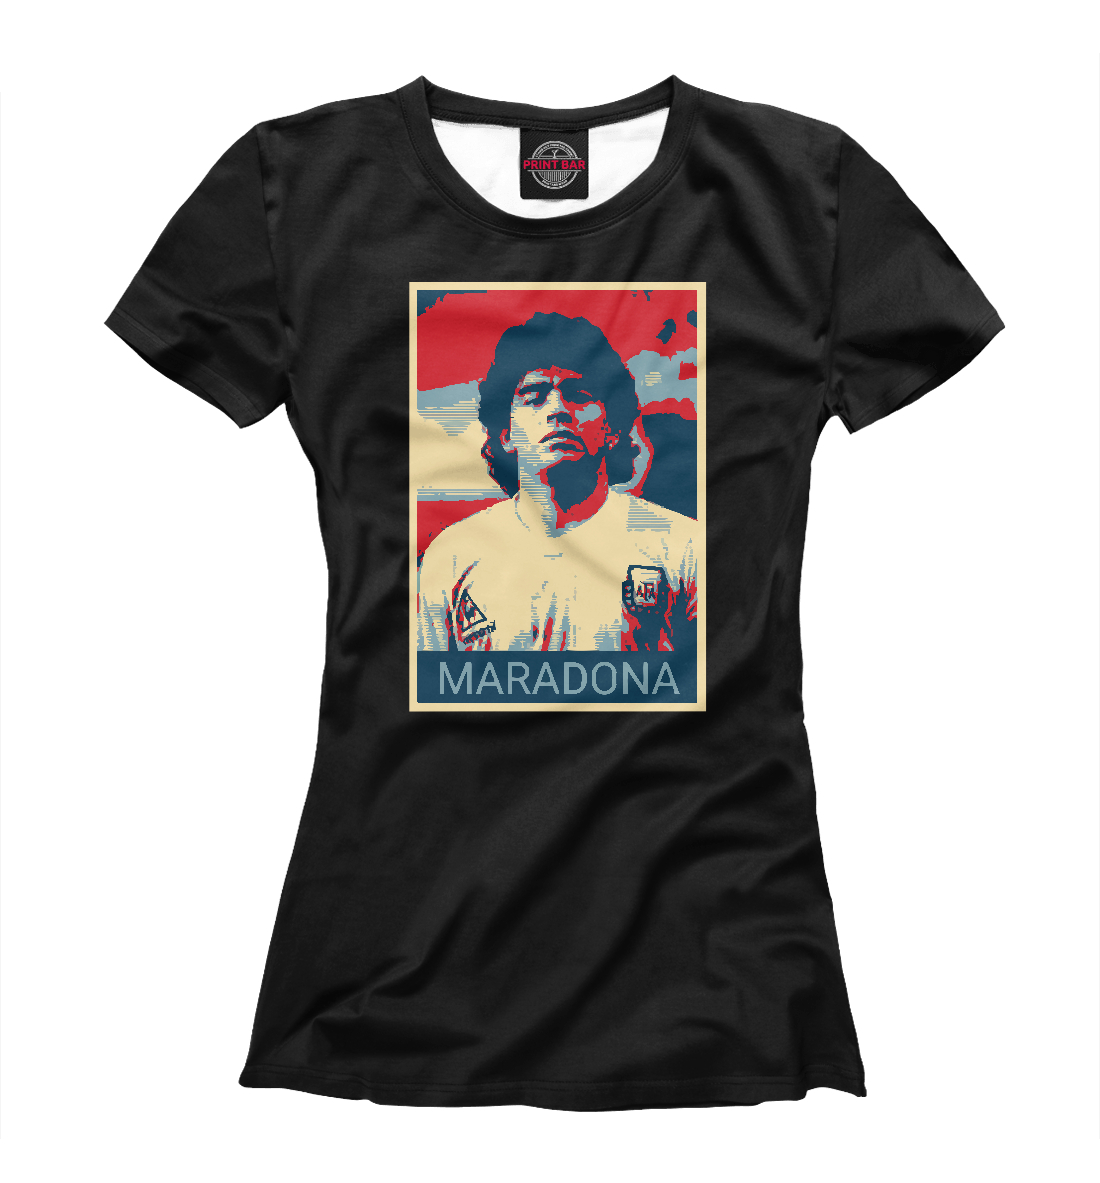 Футболка Maradona для девочек, артикул: FLT-836145-fut-1mp